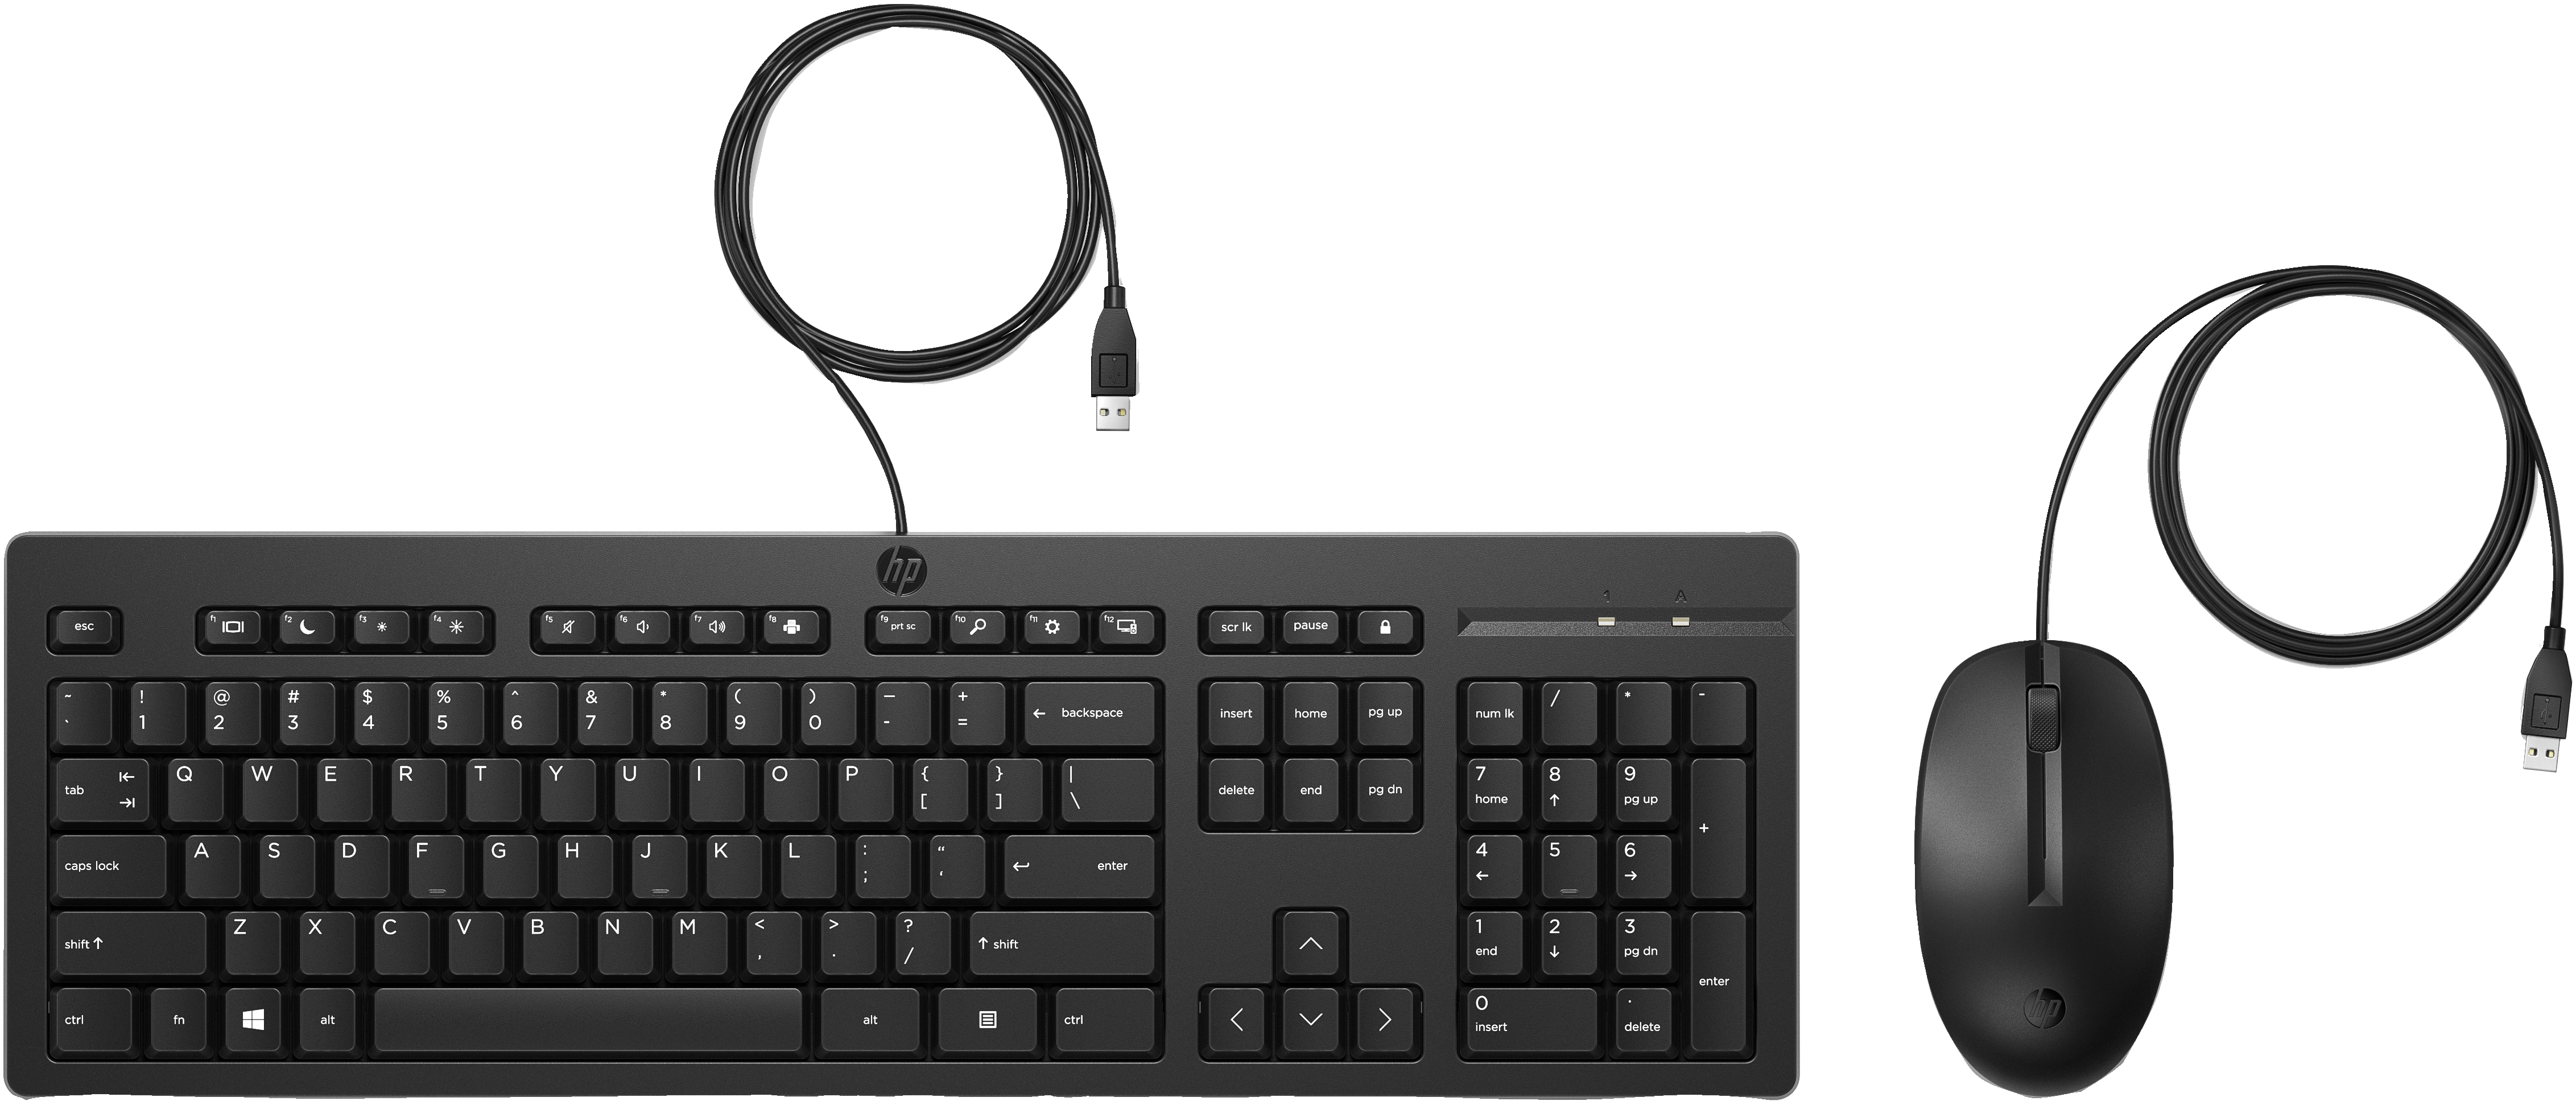 Maxim Keel moord HP 225 muis en toetsenbord met kabel (286J4AA#ABB) kopen » Centralpoint